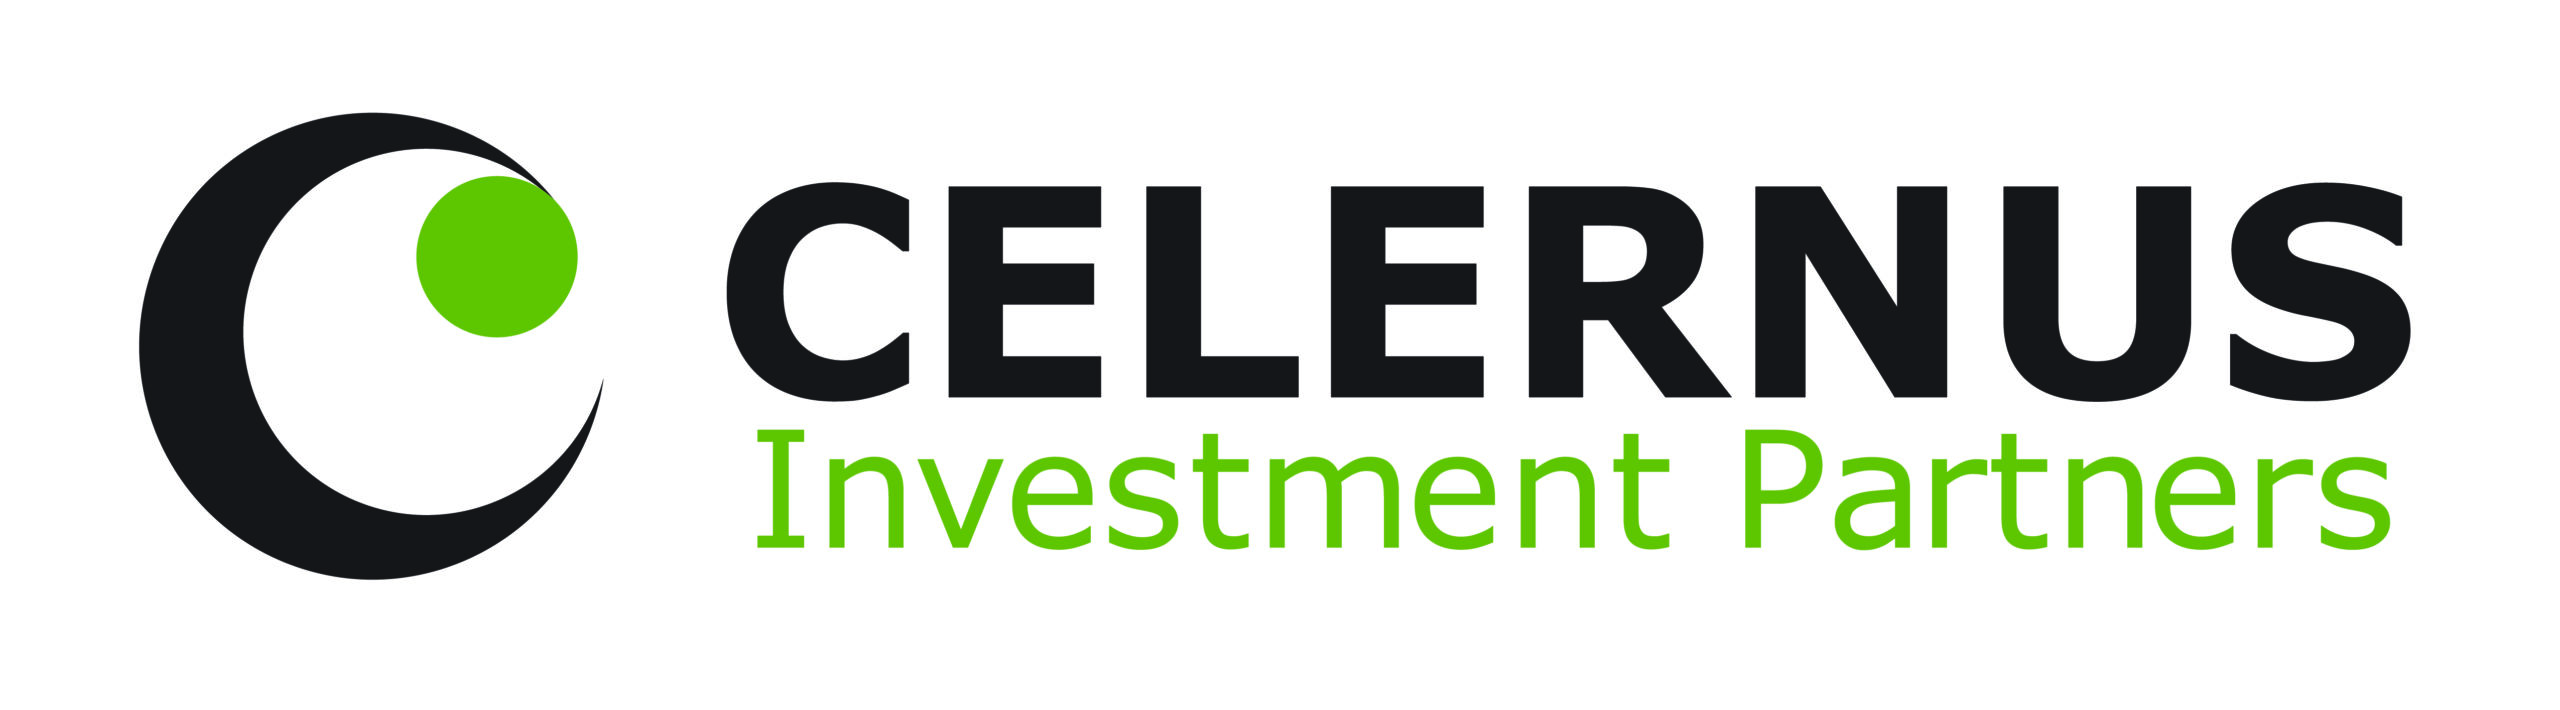 Celernus Investment Partners Inc.